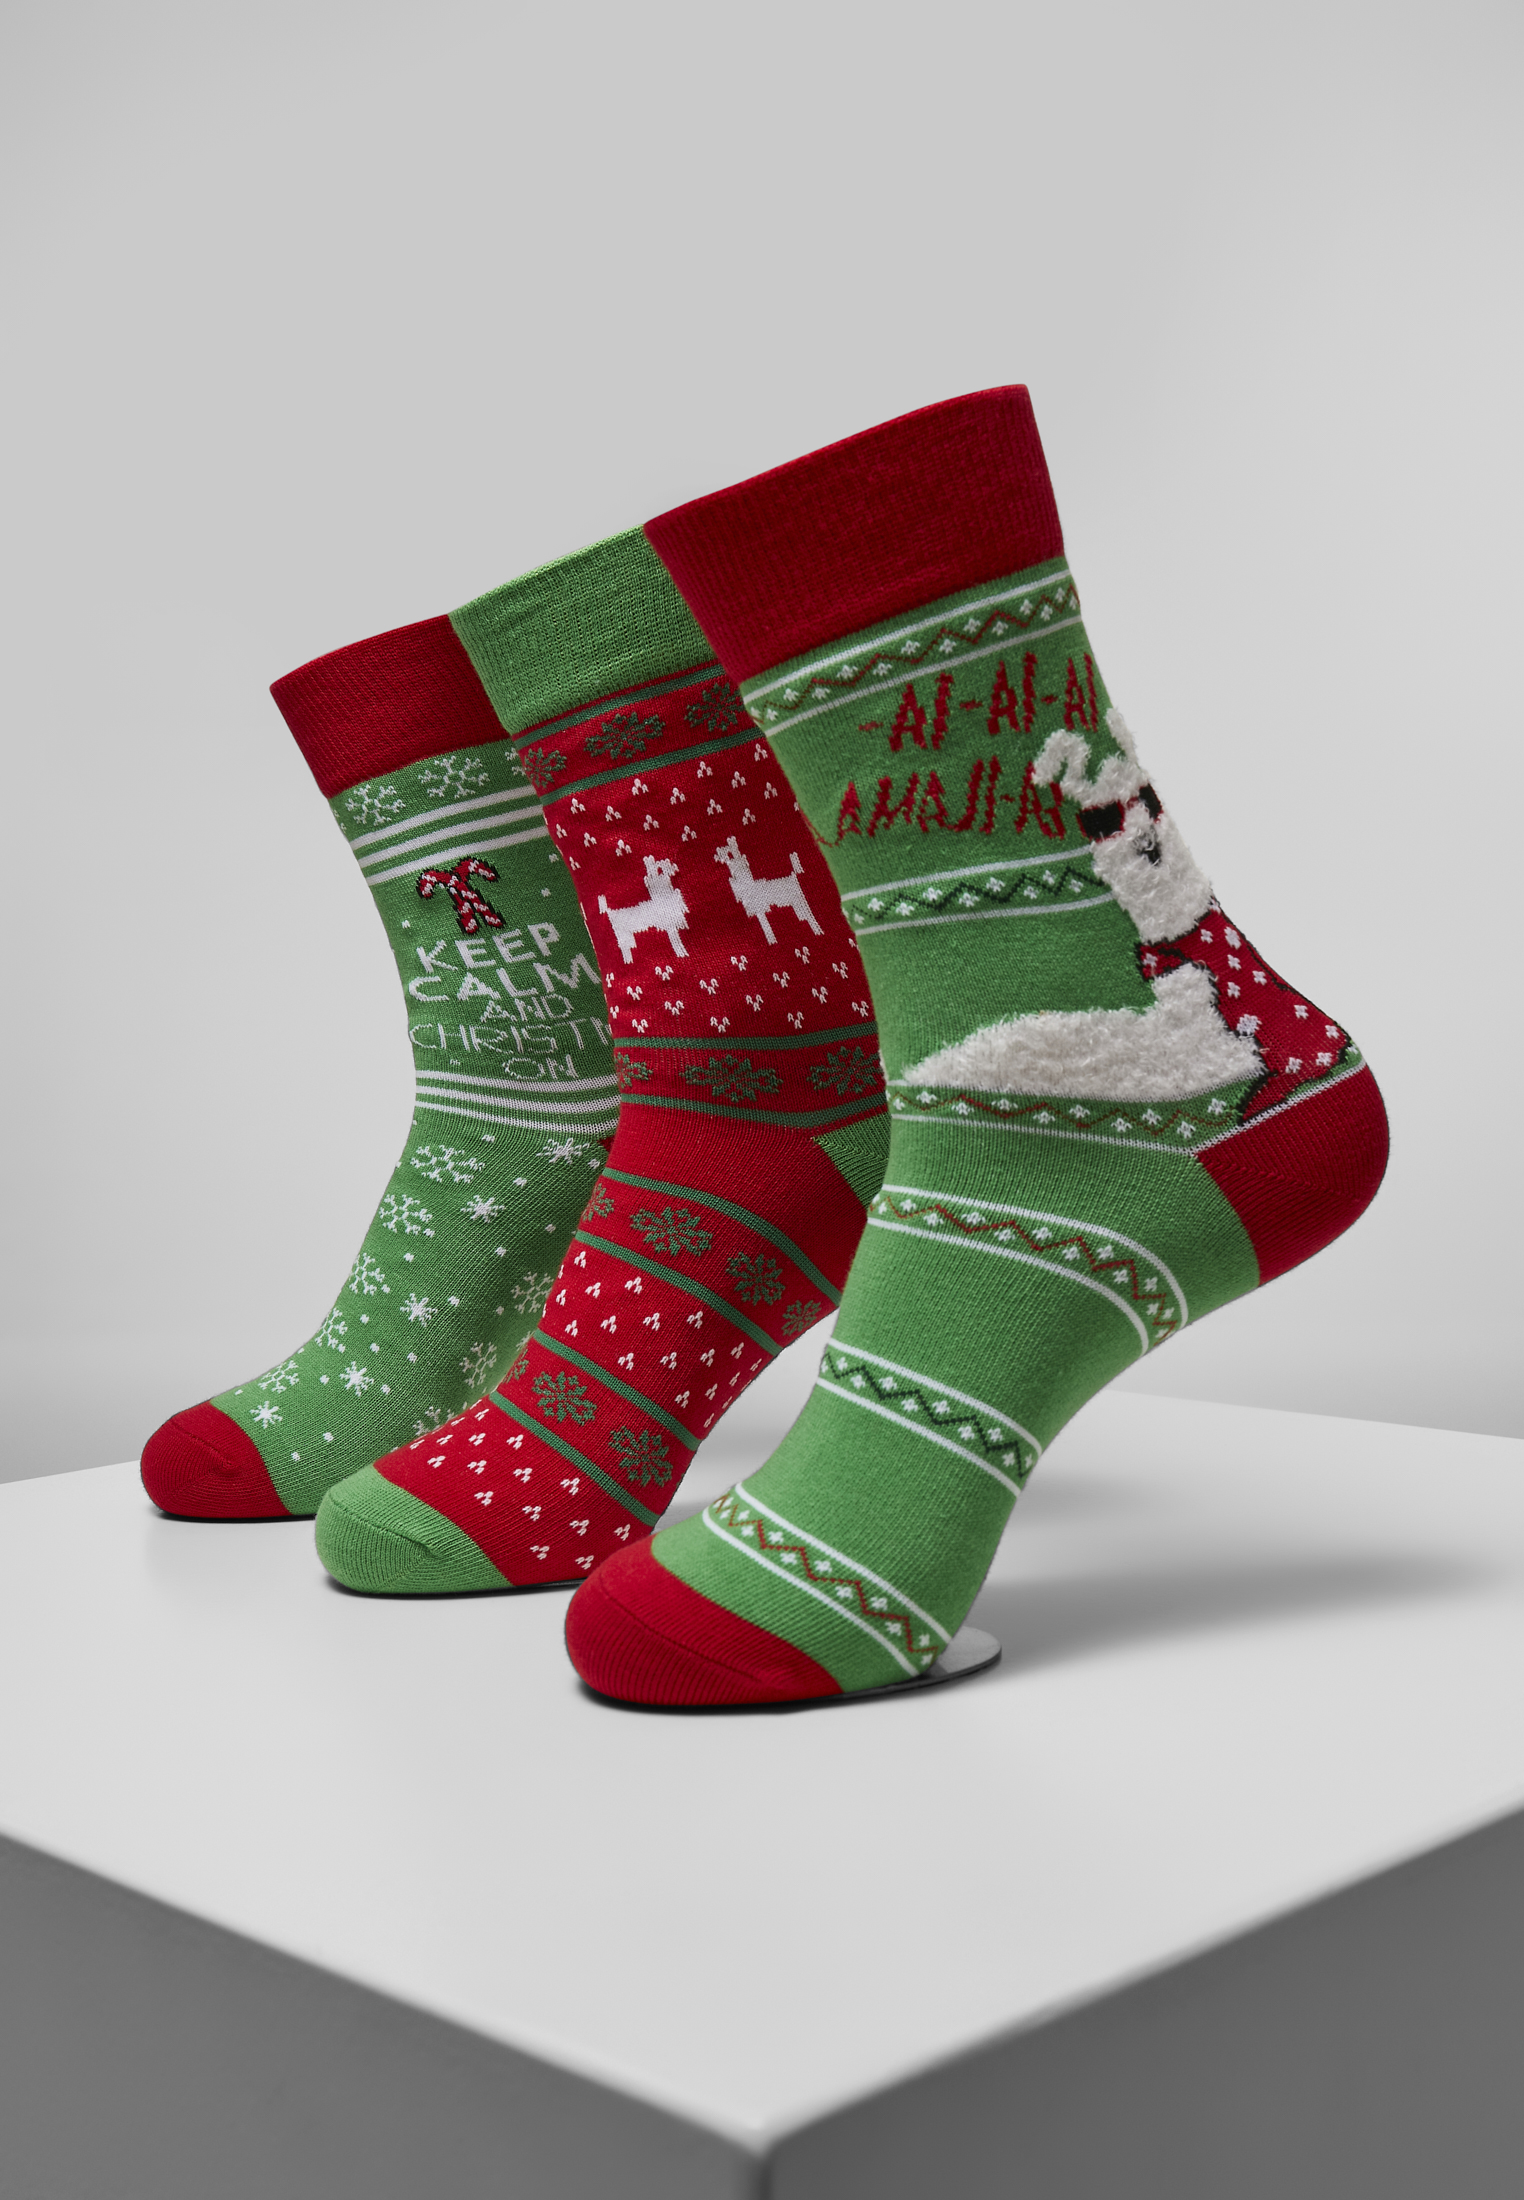 Christmas Socks Llama - Pack of 3 - Multicolored